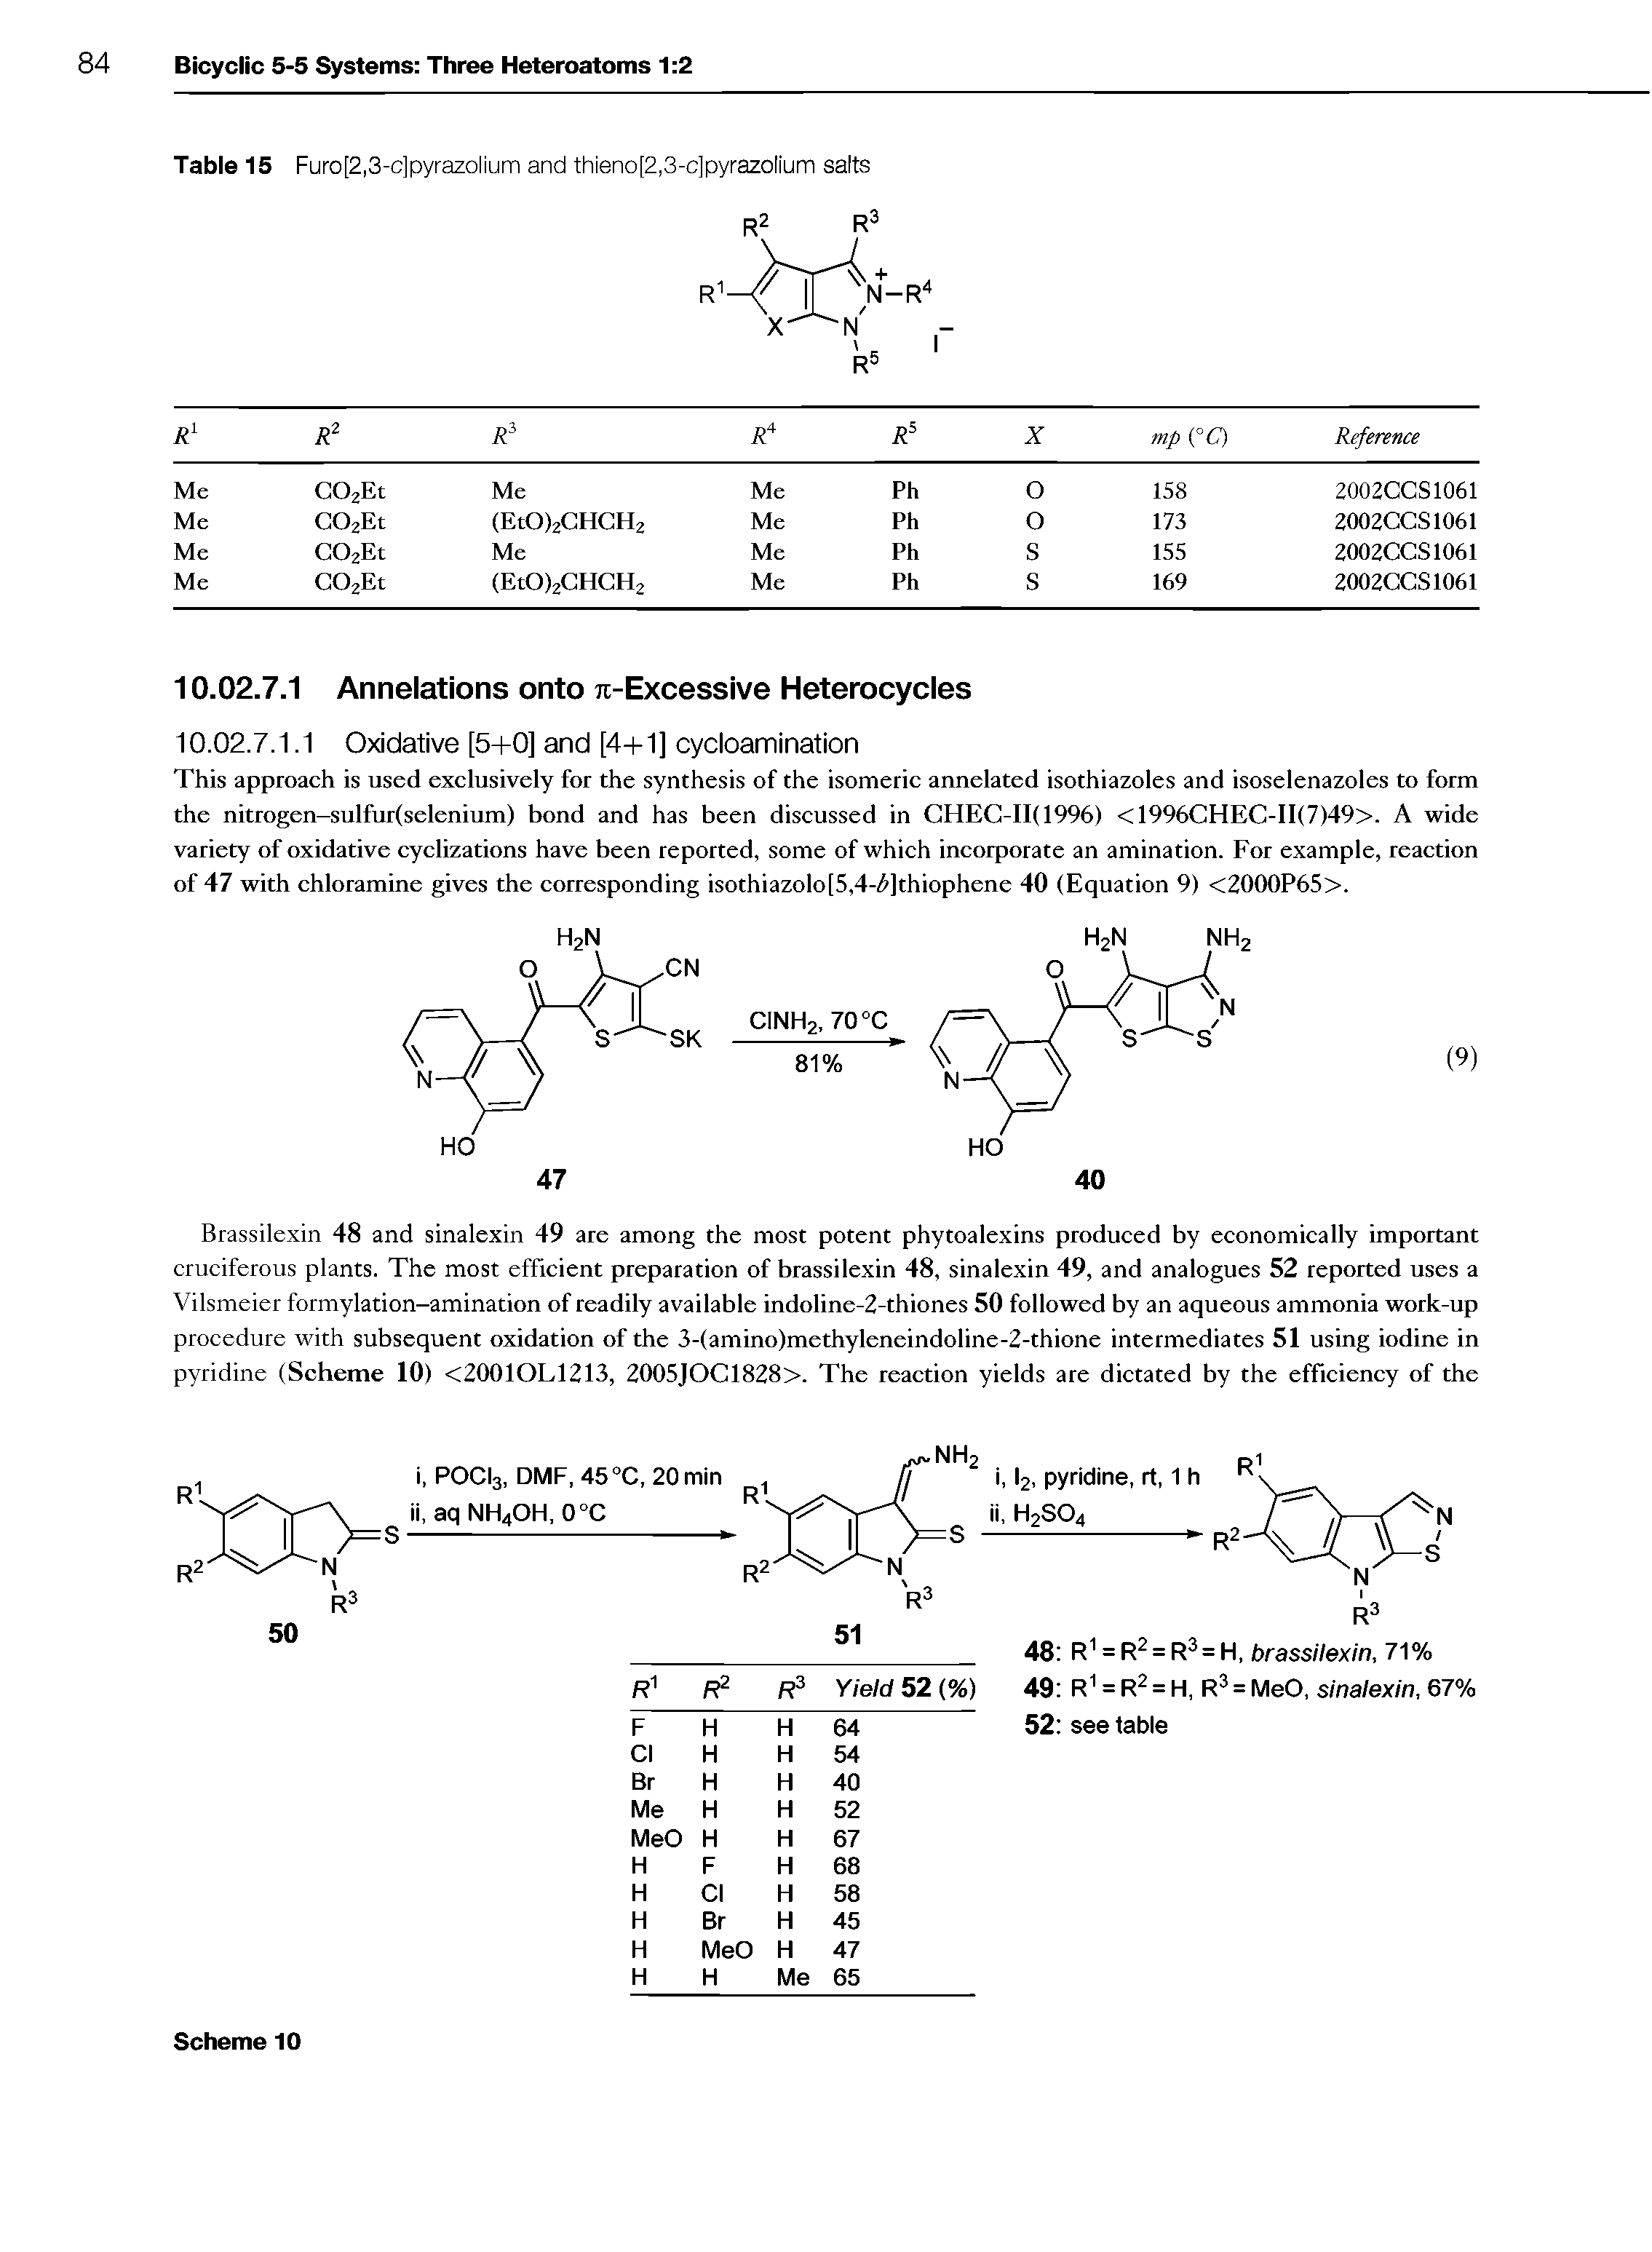 Table 15 Furo[2,3-c]pyrazolium and thieno[2,3-c]pyrazolium salts...